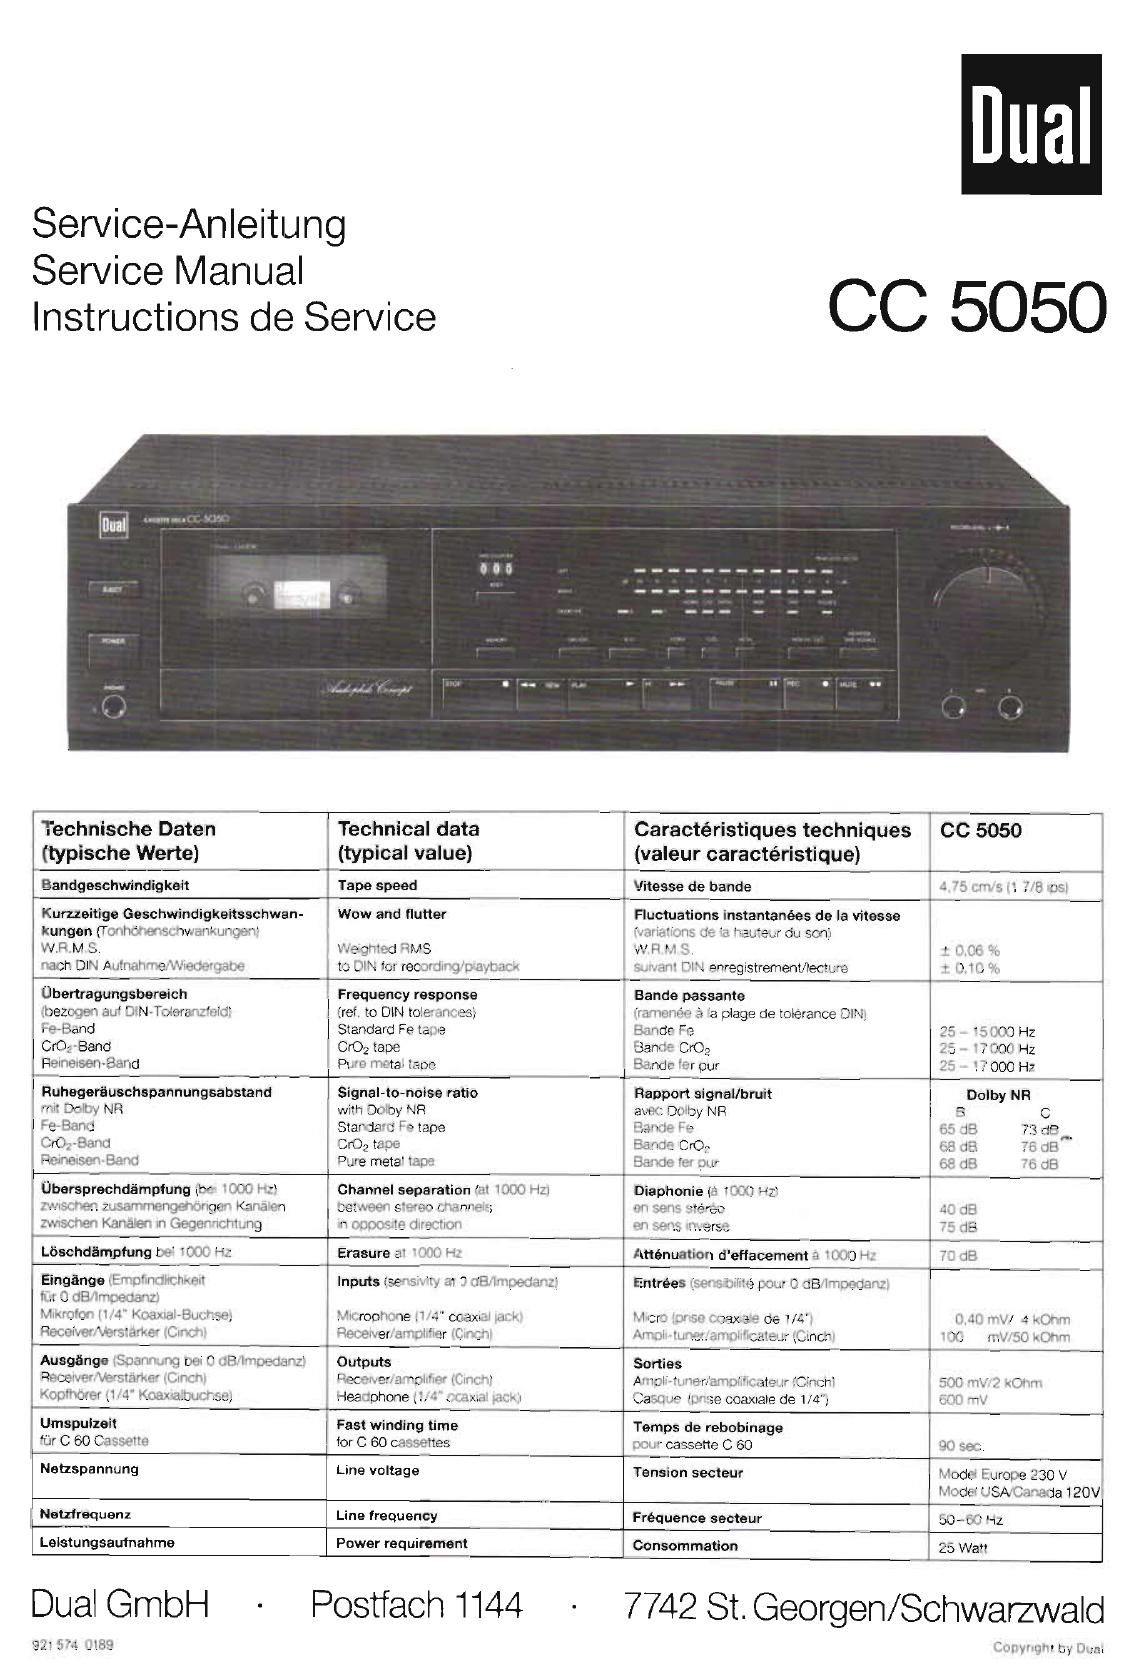 Dual CC 5050 Service Manual